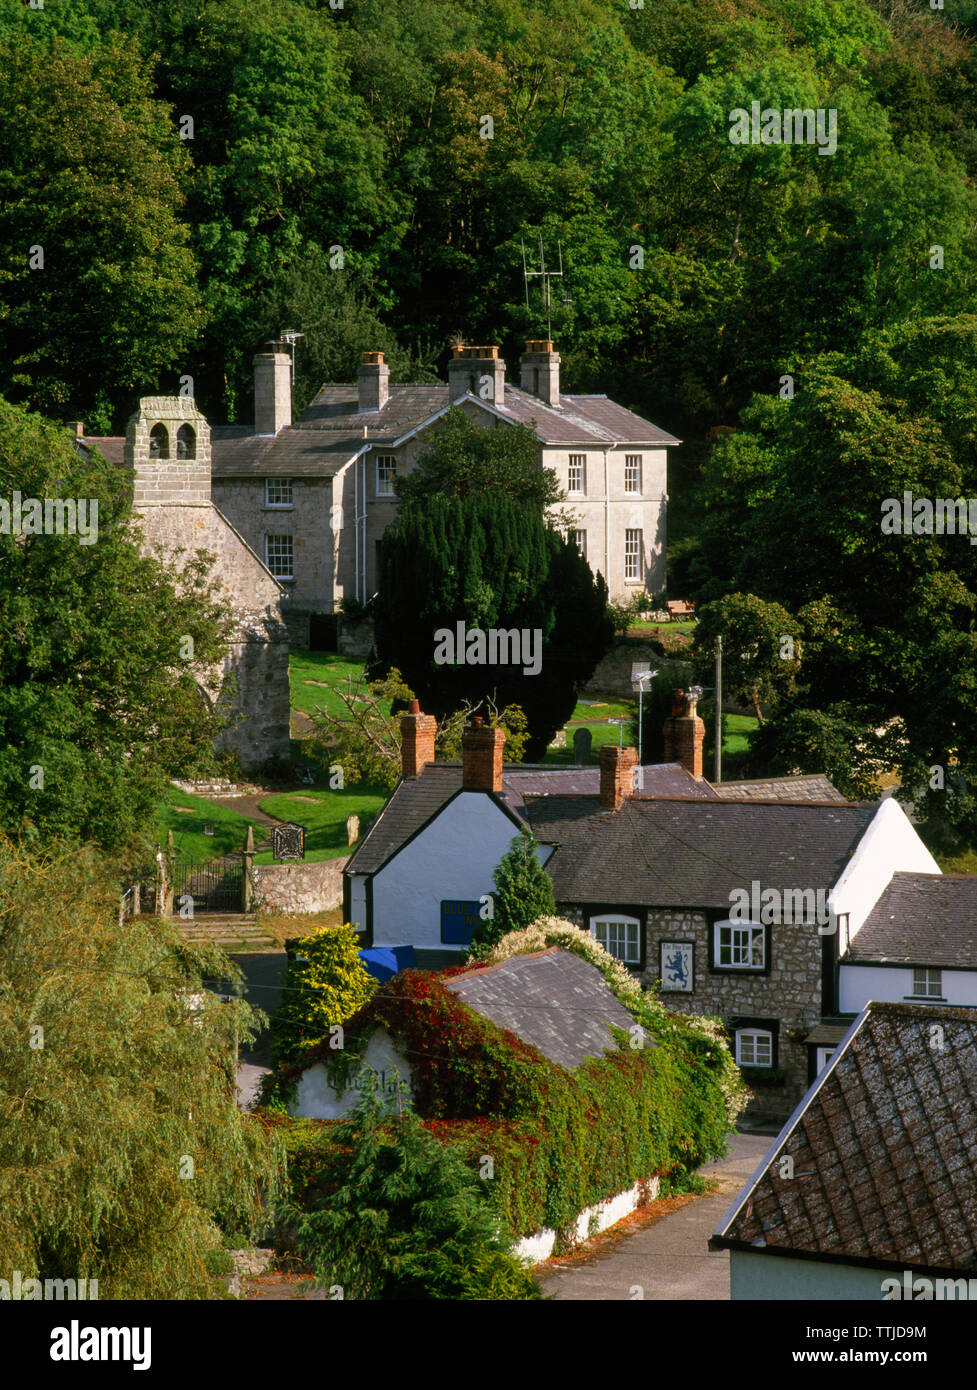 View SE oltre Cwm village, Denbighshire, UK, compreso il Blue Lion Inn, St Mael & St Sulien C XIV chiesa & ex vicarage Ty Cerrig (centro posteriore). Foto Stock